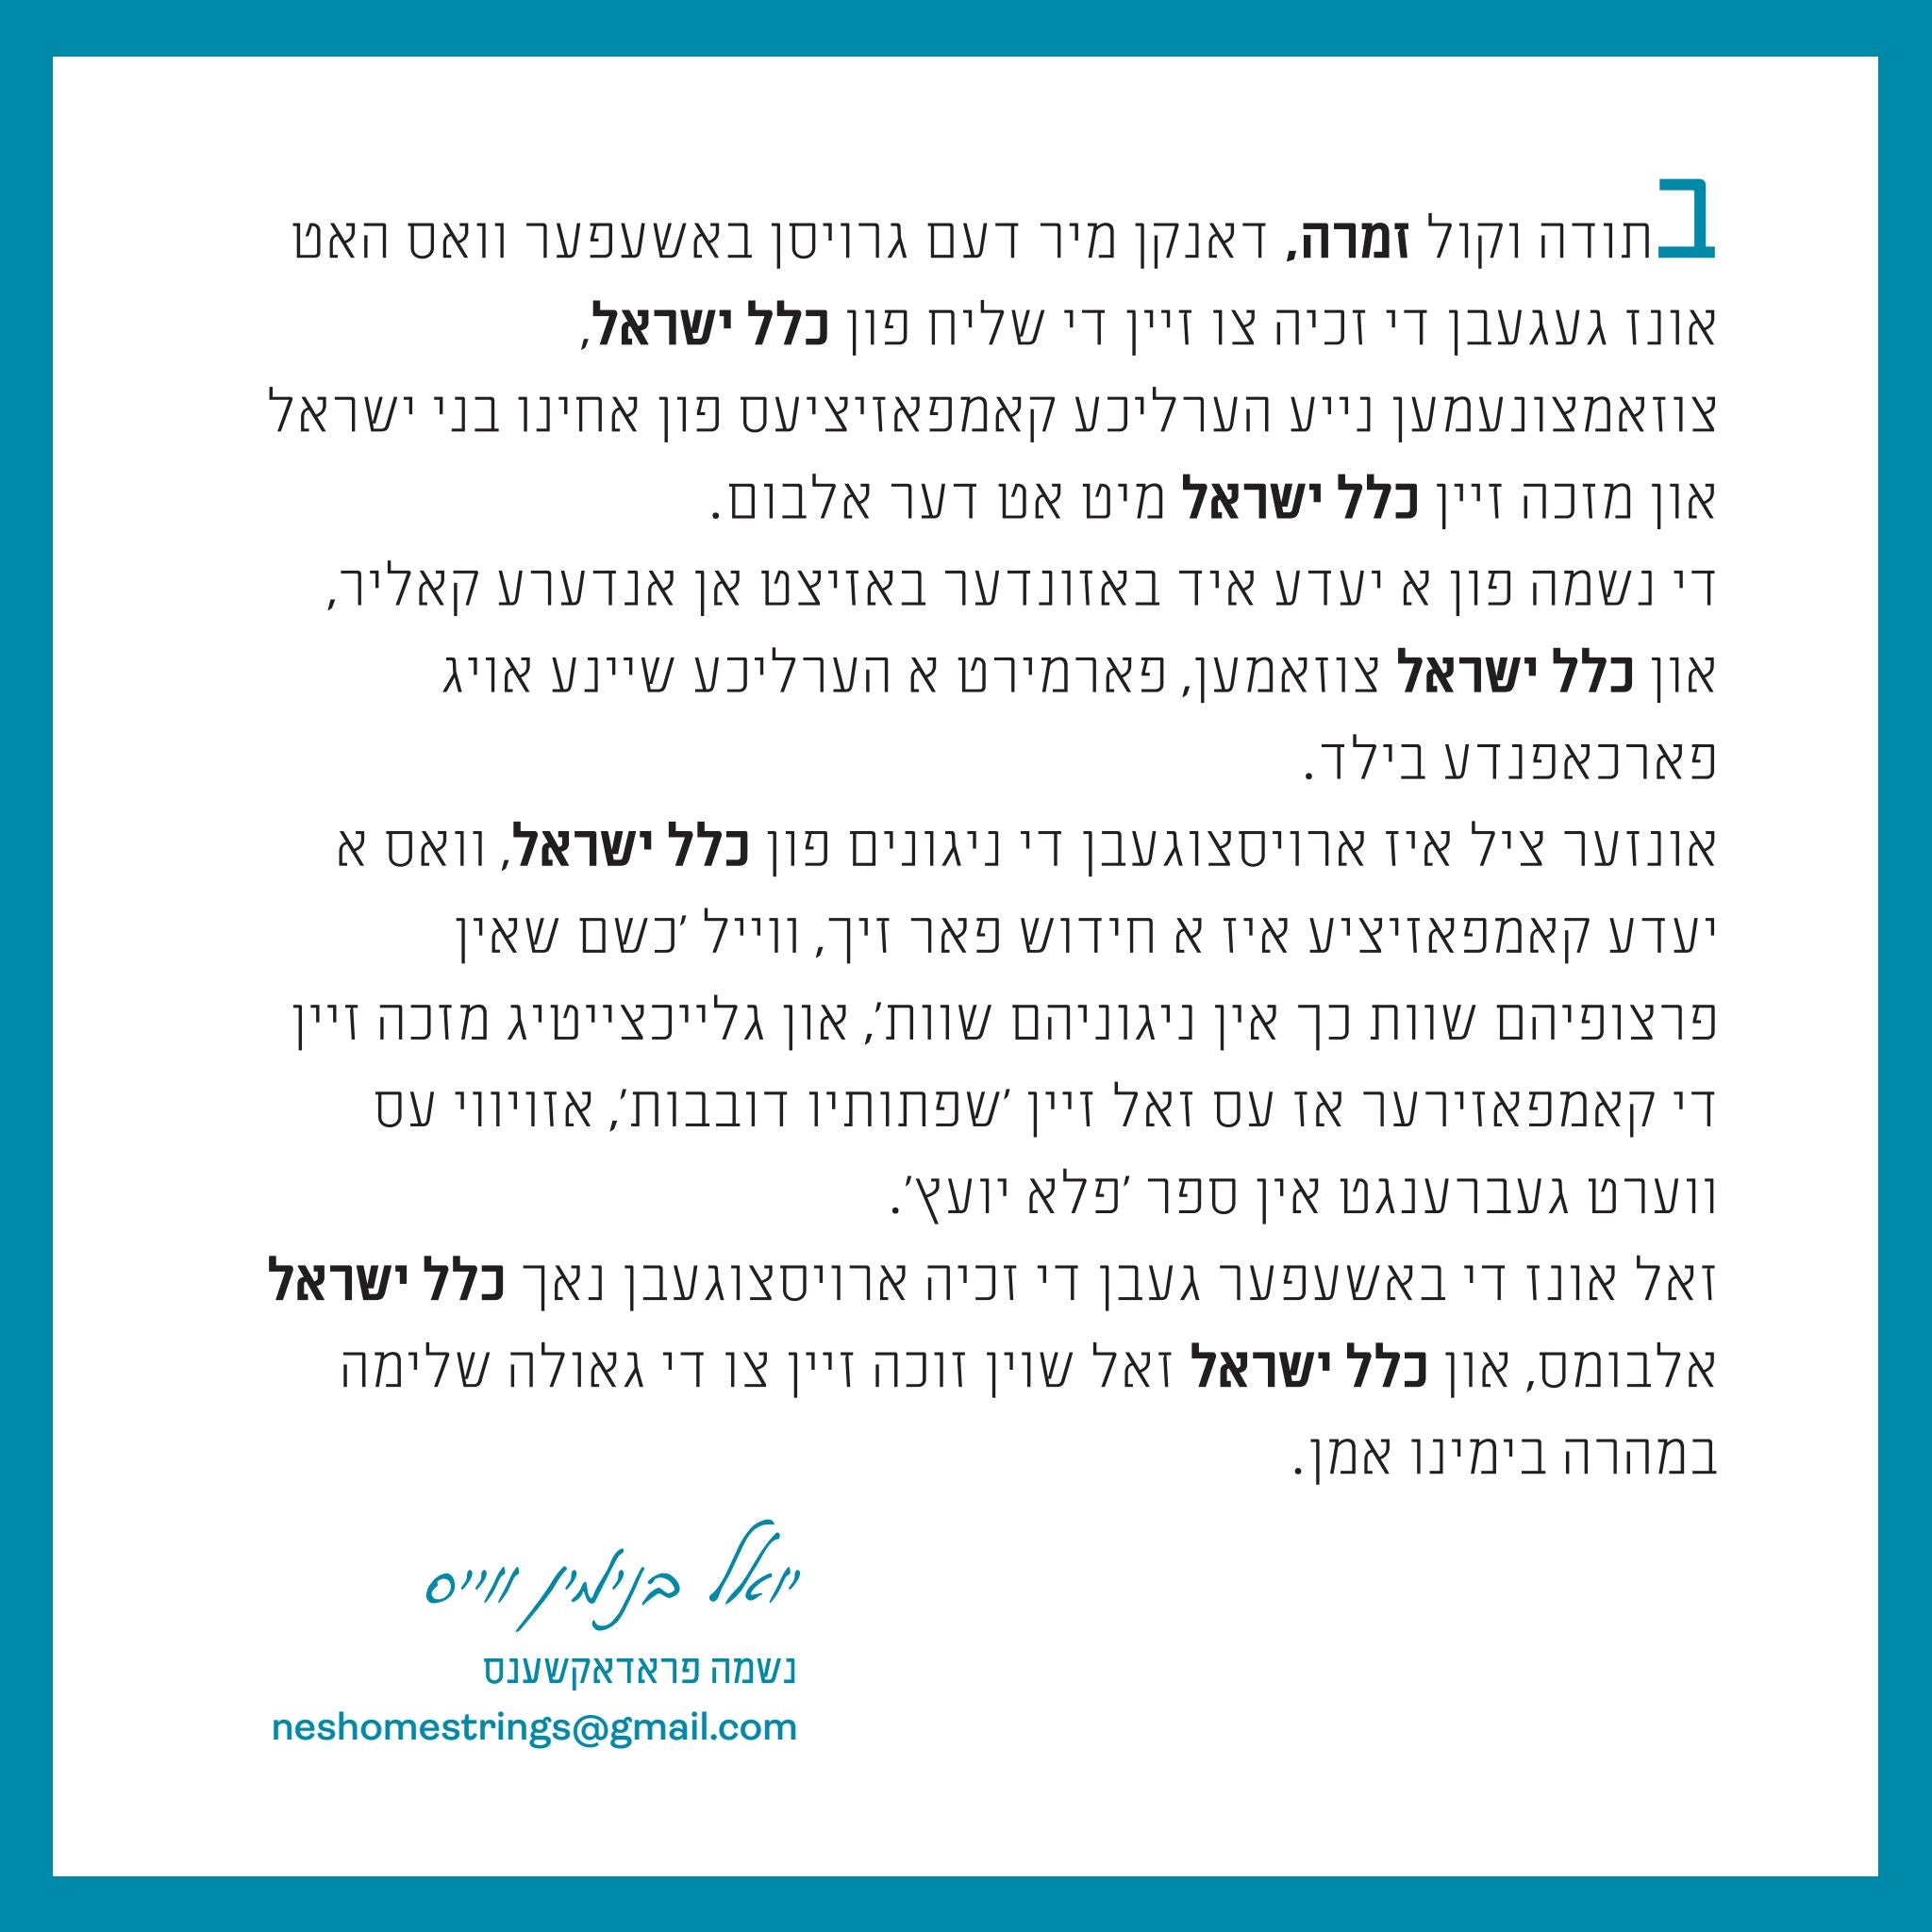 Neshama Productions - Klal Yisroel